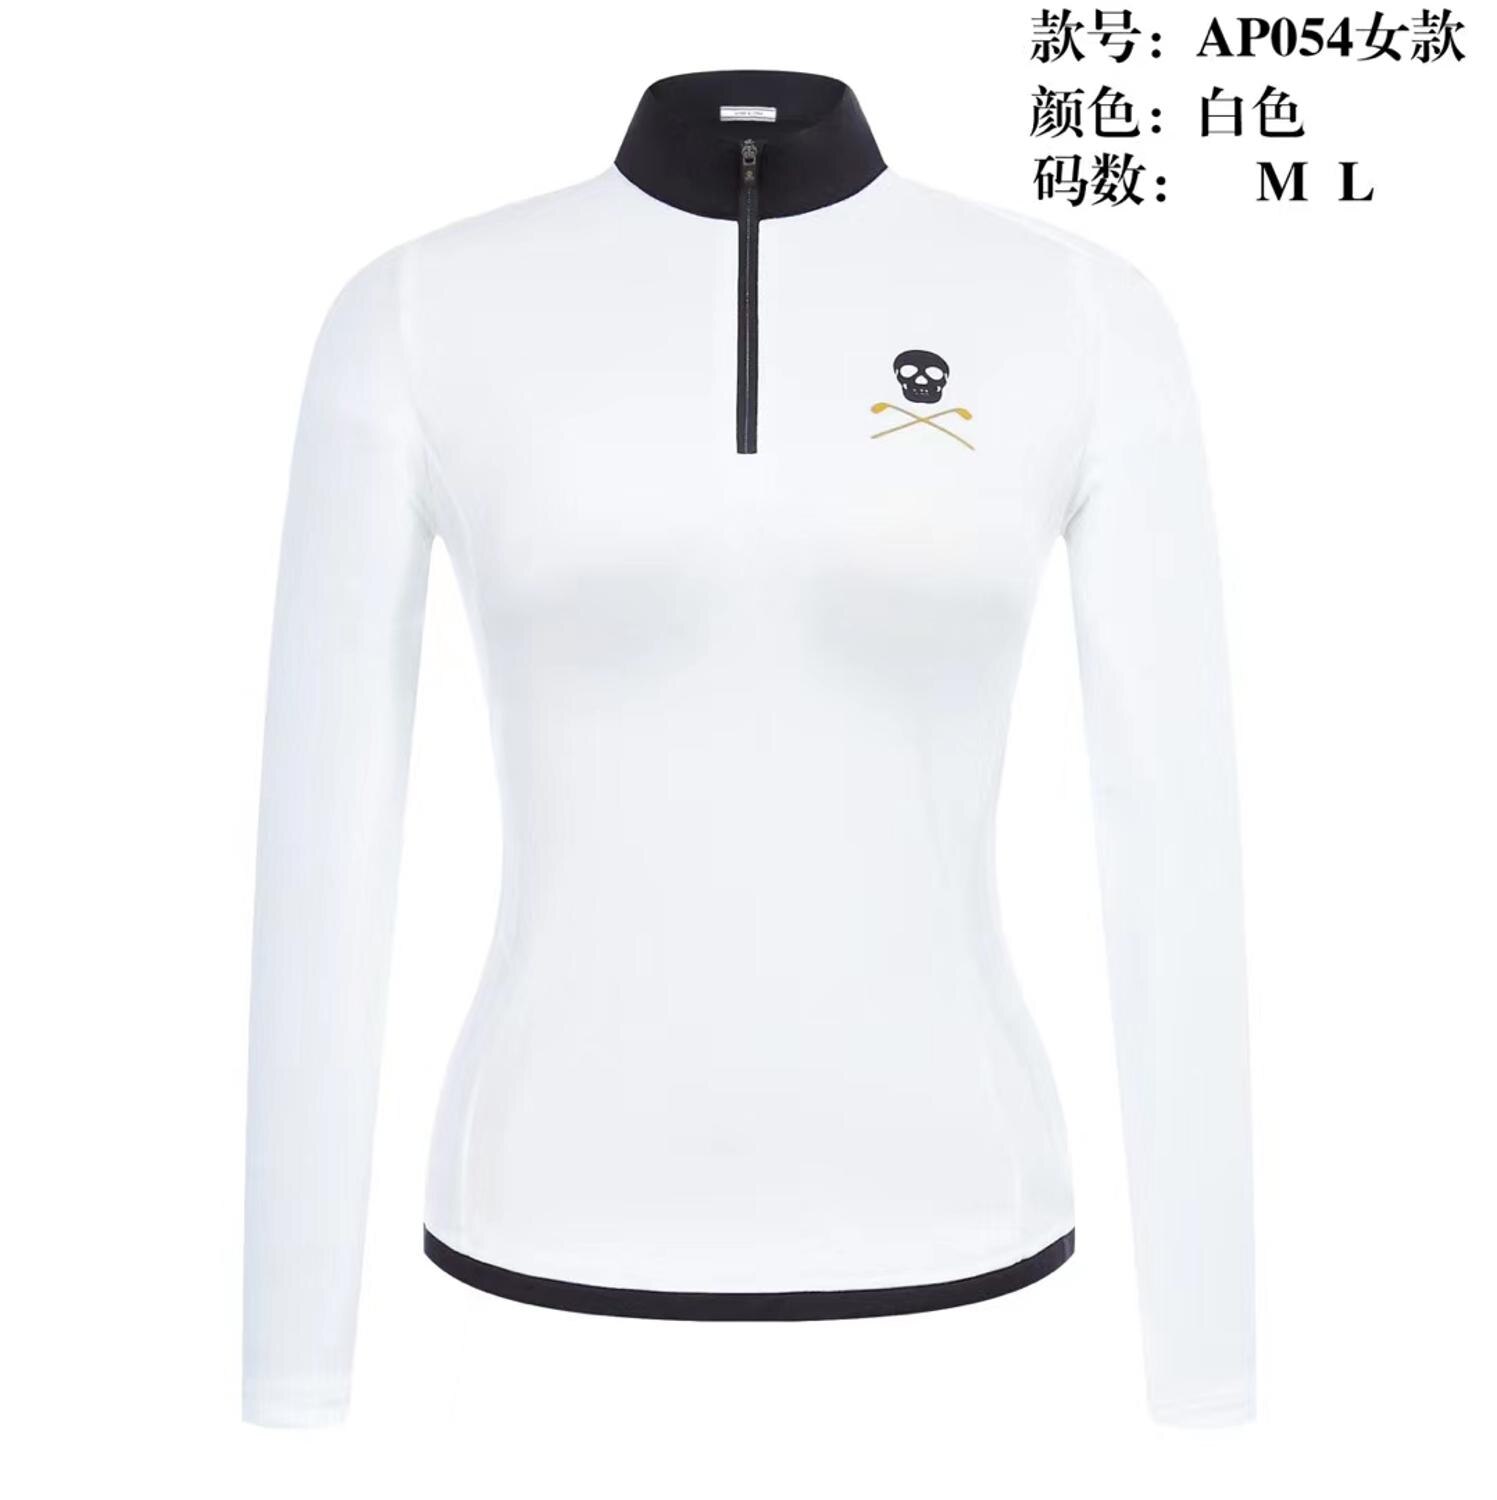 Golf langærmet t-shirt kvinder windbreaker sol jakke: Hvid / M